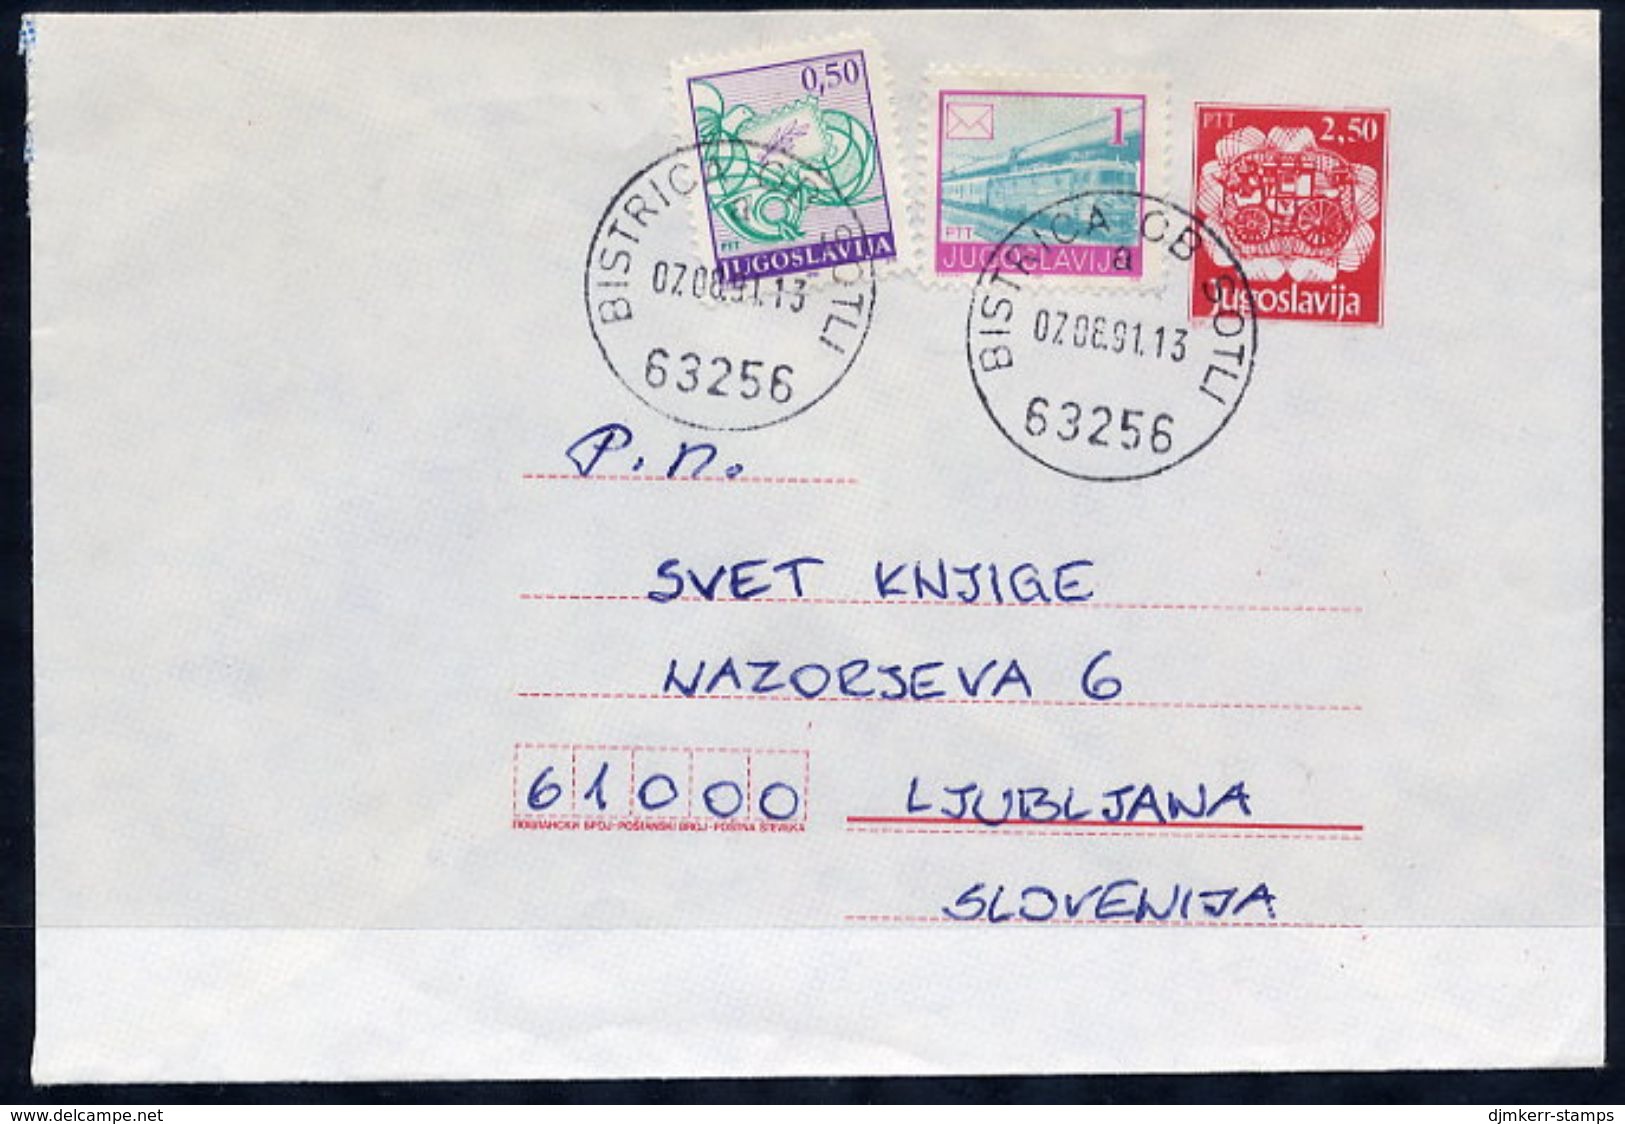 YUGOSLAVIA 1991 Mailcoach 2.50 D. Stationery Envelope Used With Additional Franking.  Michel U97 - Postal Stationery